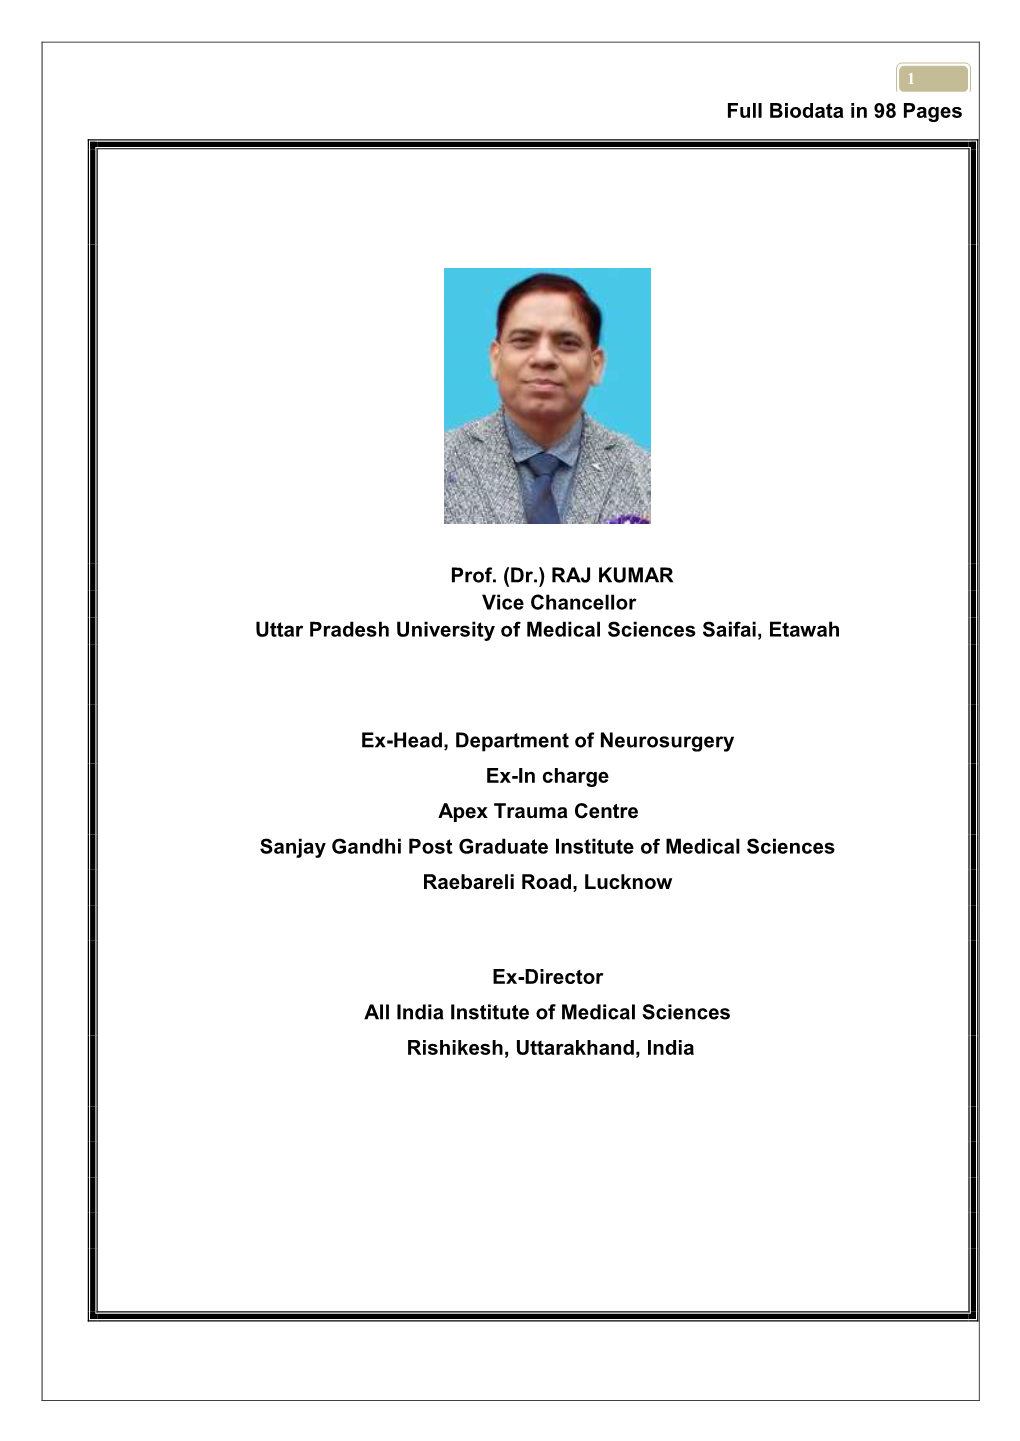 (Dr.) RAJ KUMAR Vice Chancellor Uttar Pradesh University of Medical Sciences Saifai, Etawah